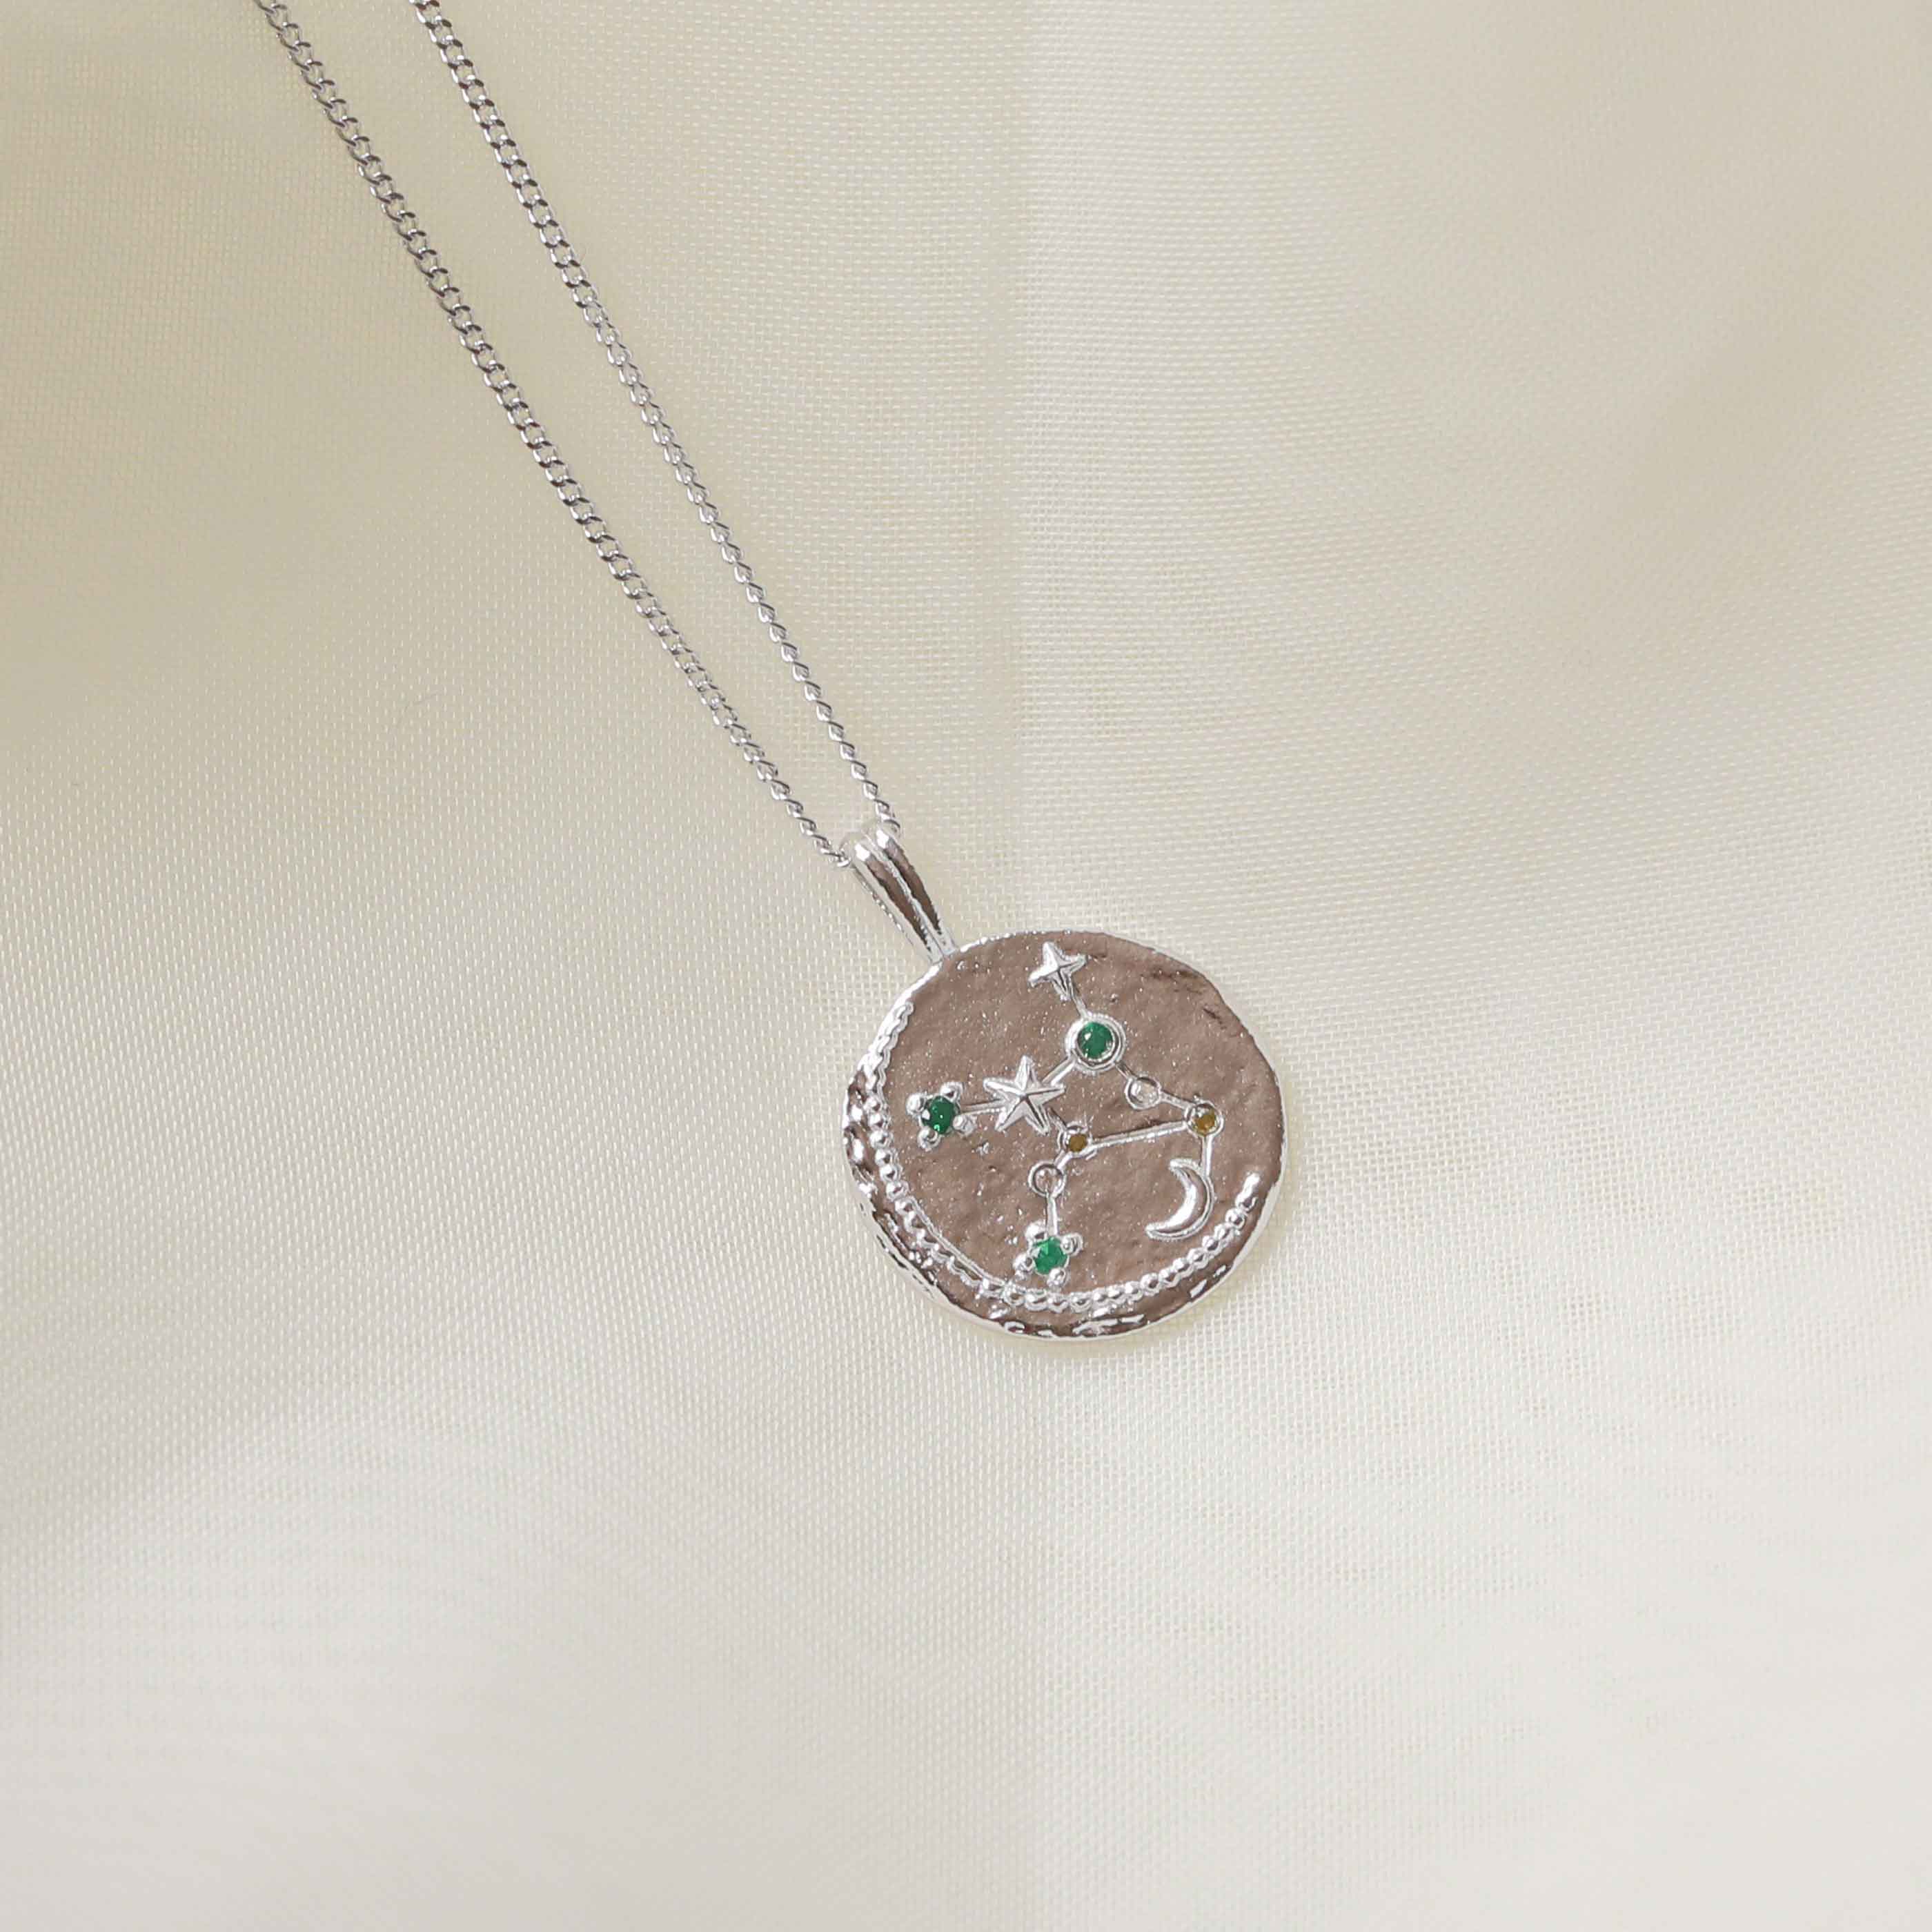 Virgo Zodiac Pendant Necklace in Silver